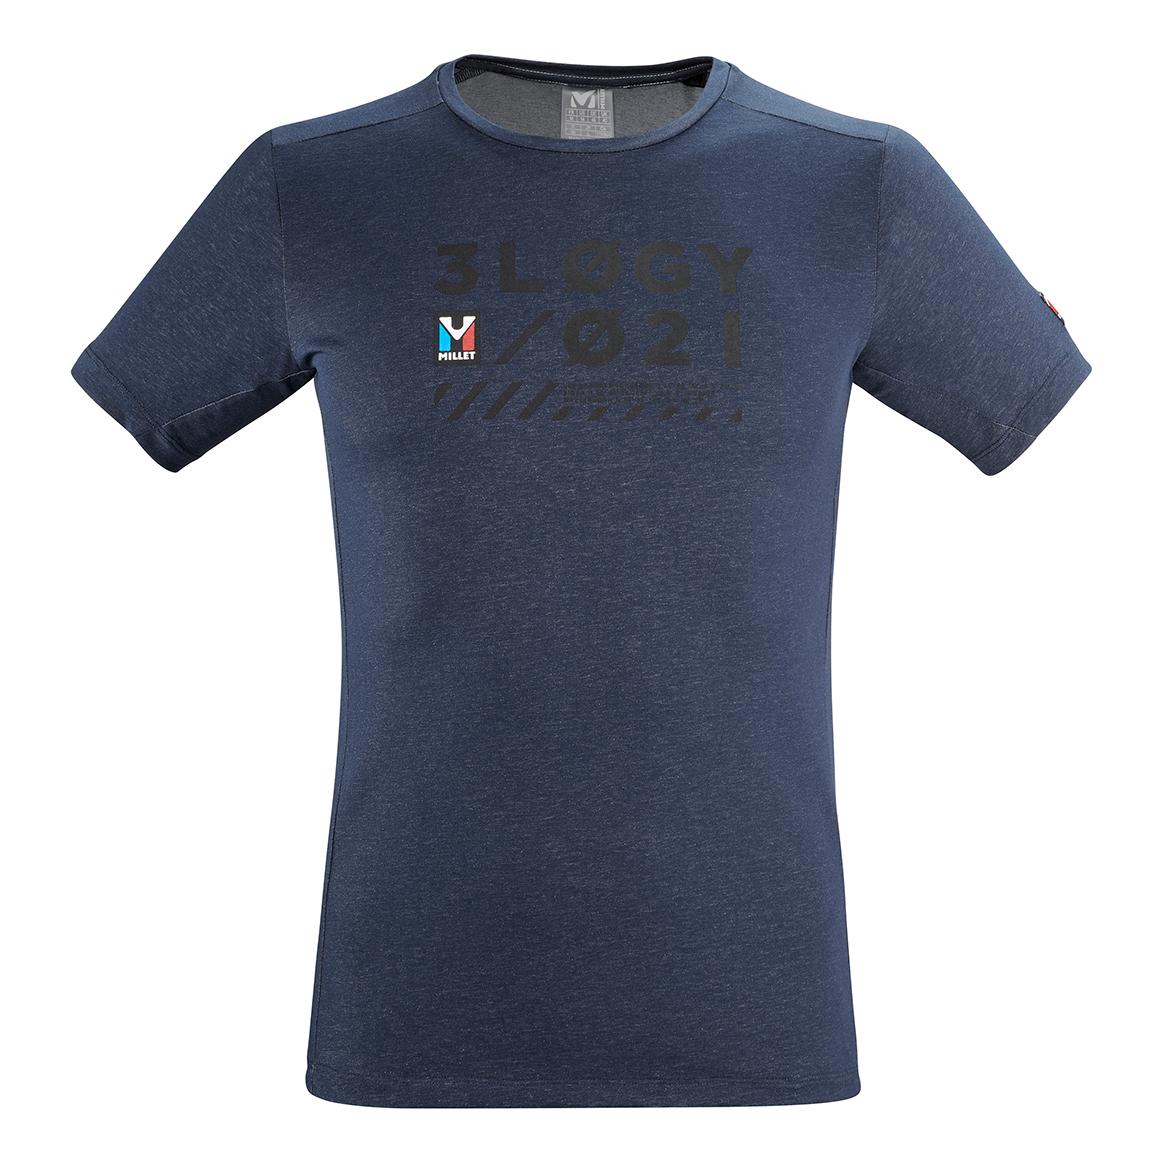 Millet Trilogy 21 T-Shirt Short Sleeve Bleu foncé S 